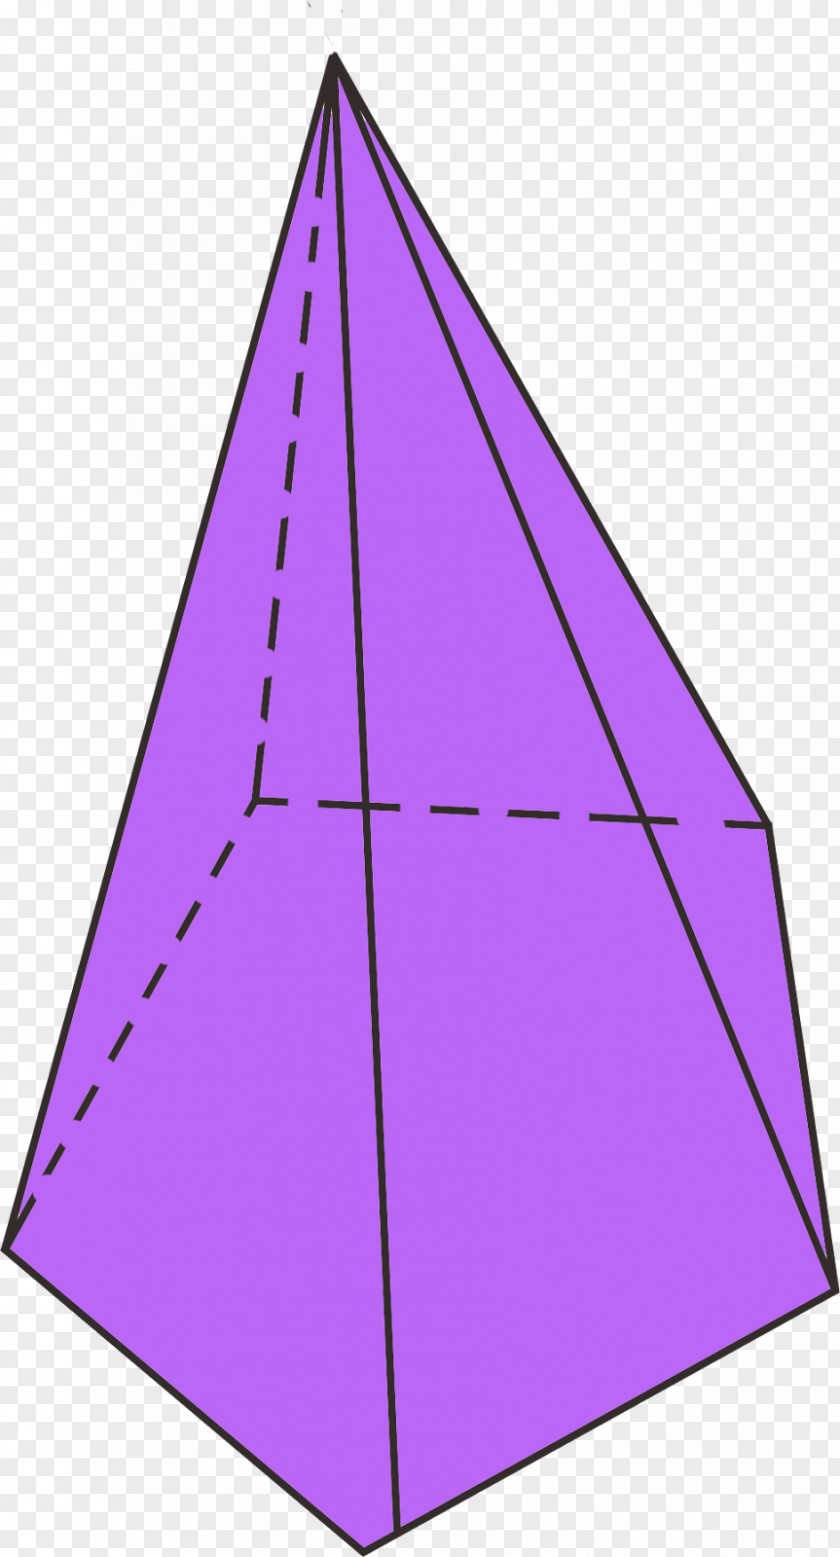 Triangle Bangun Datar Geometric Shape Point PNG